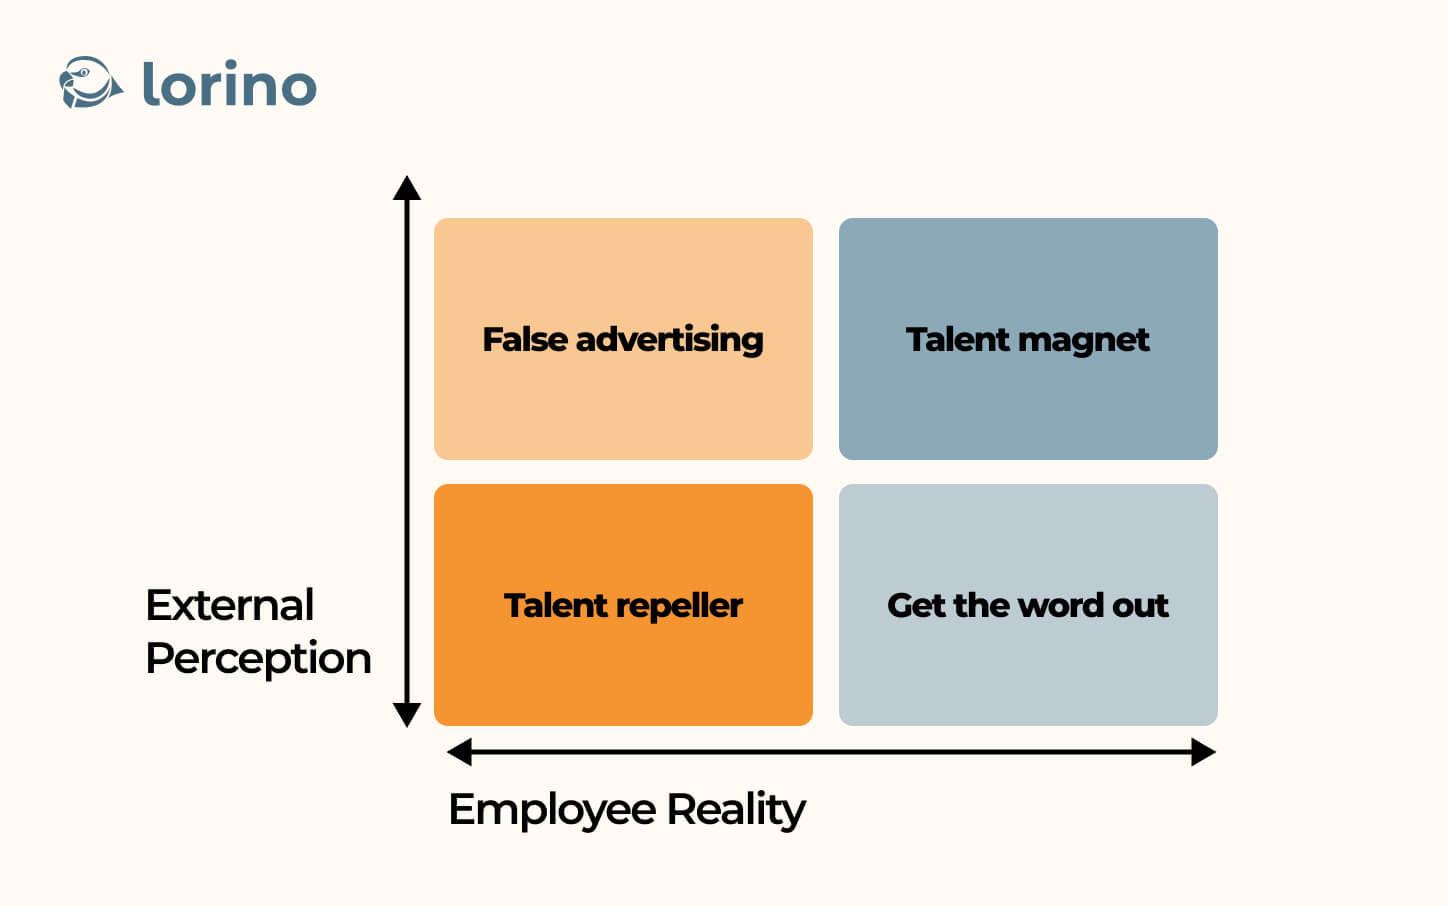 External Perception Vs. Employee Reality when it comes to Employer Brand - Lorino